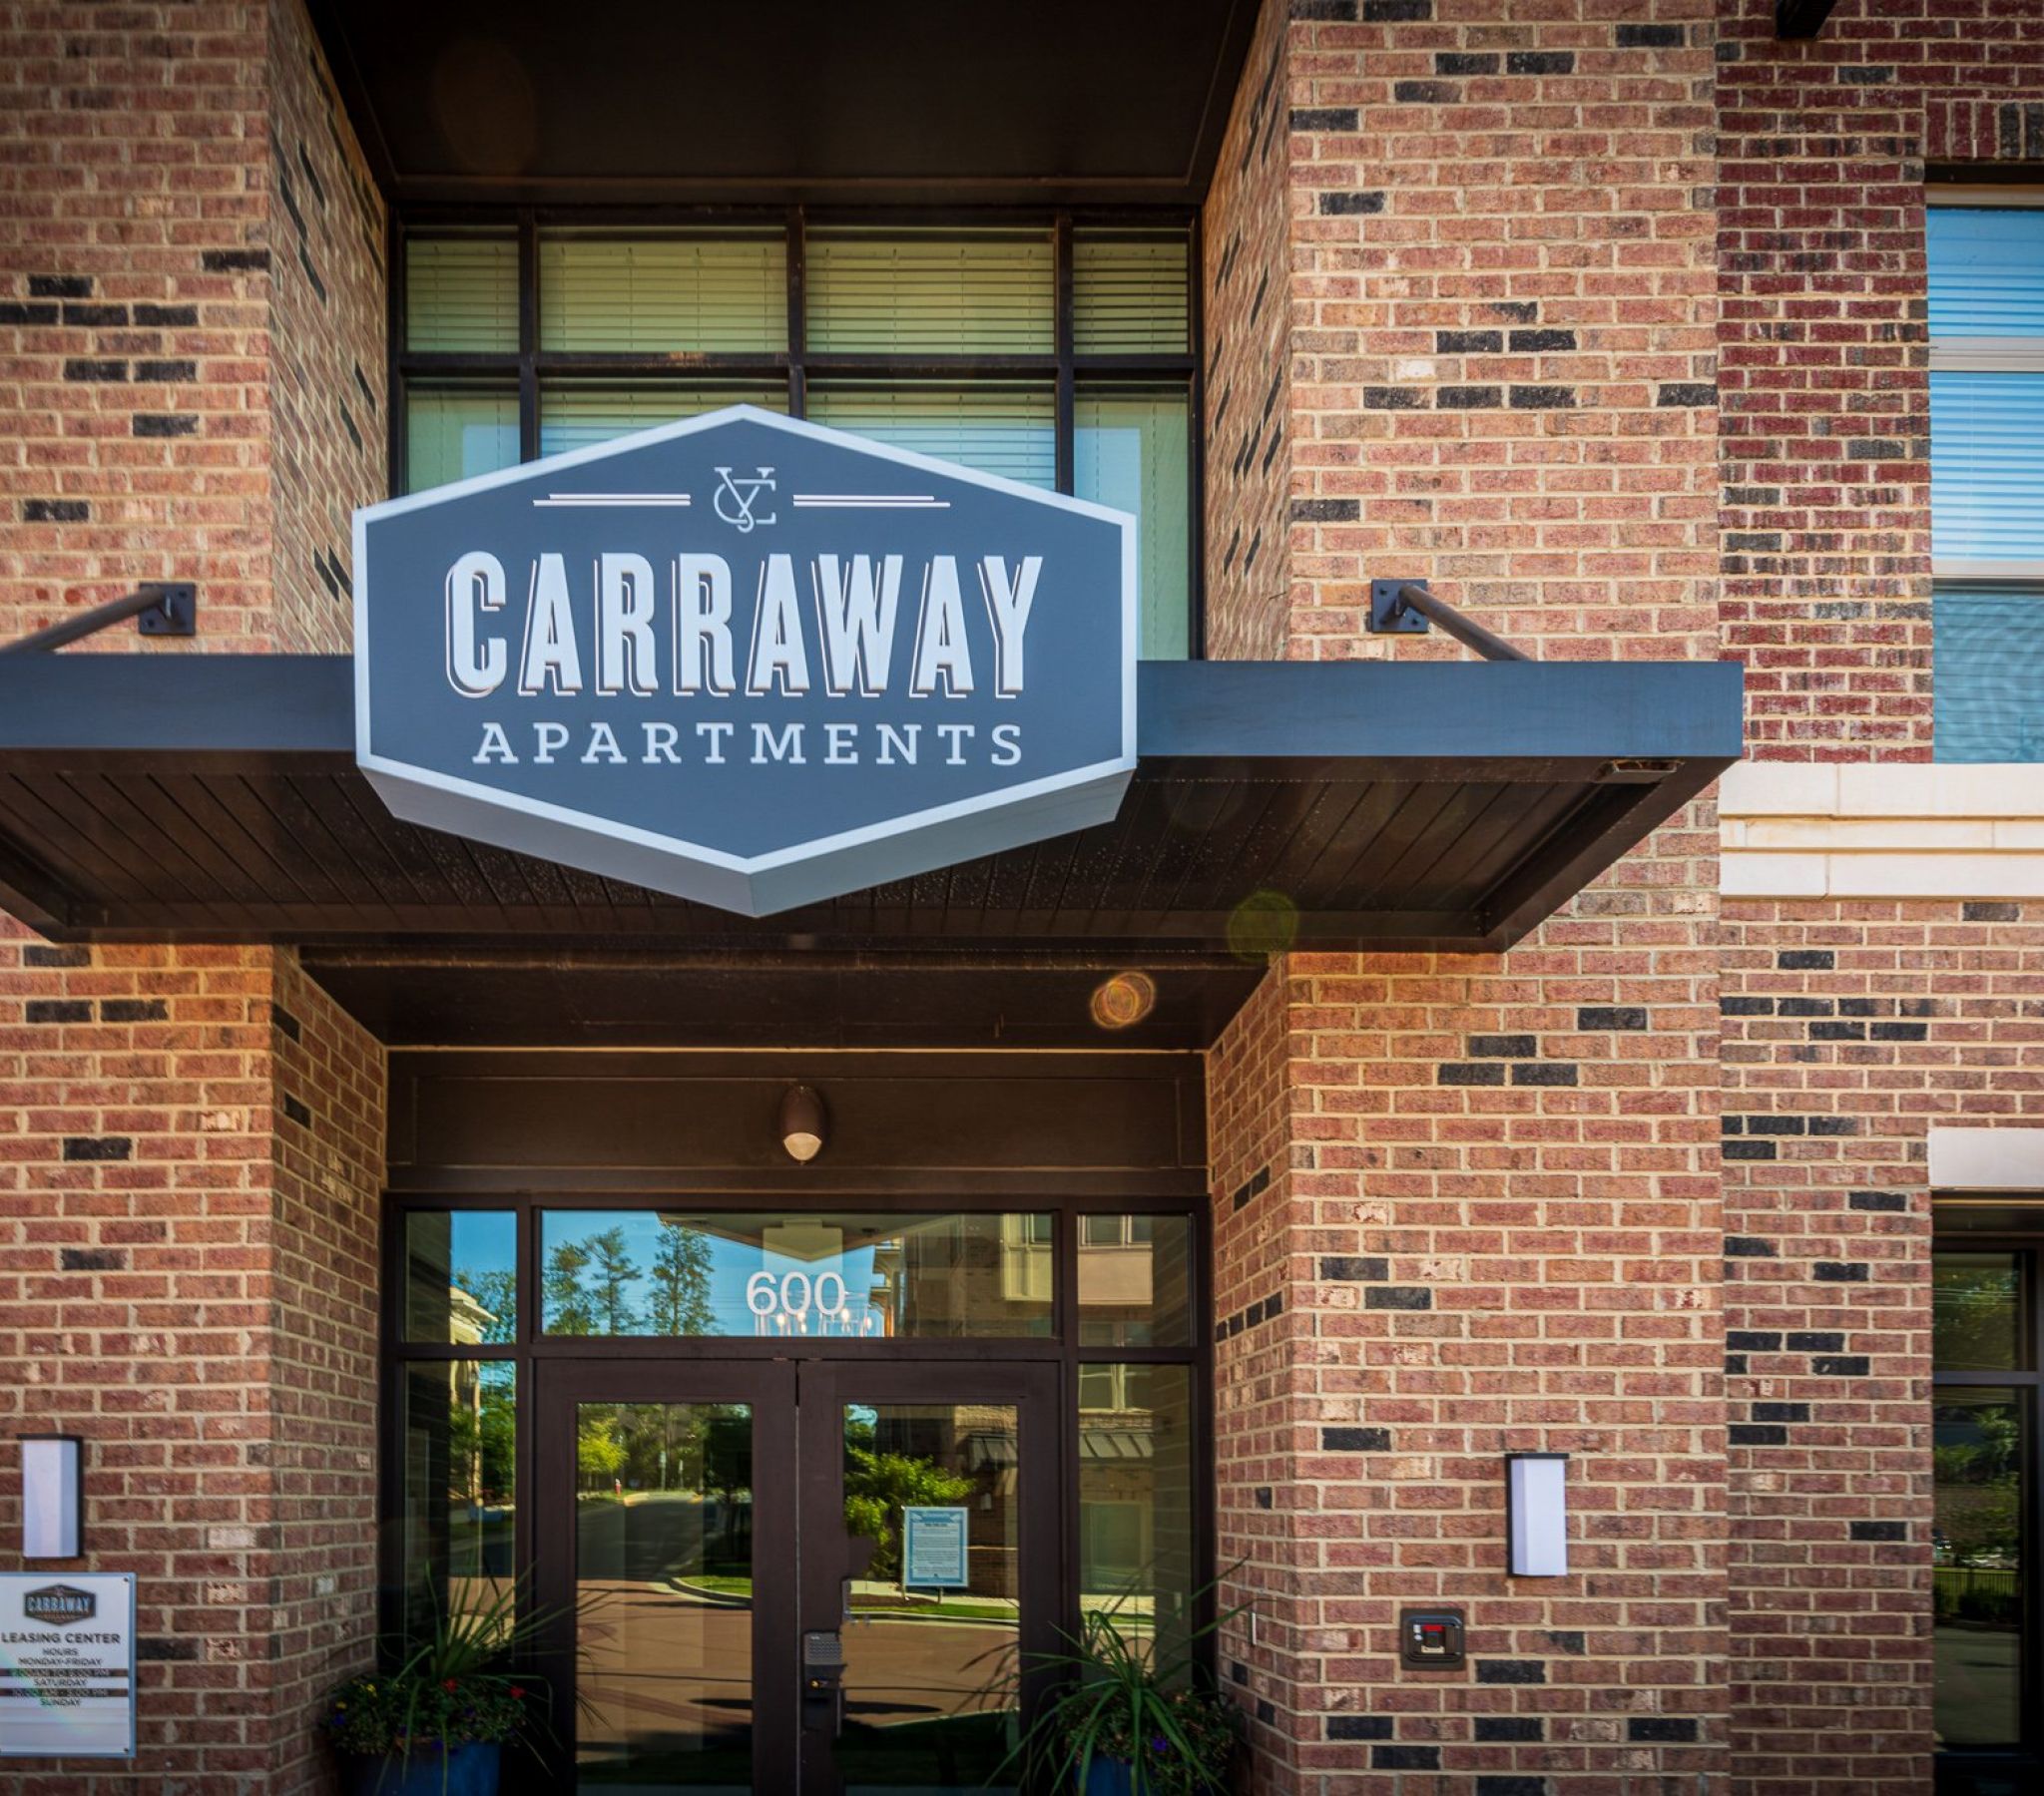 Carraway Village Apartments exterior sign and entrance